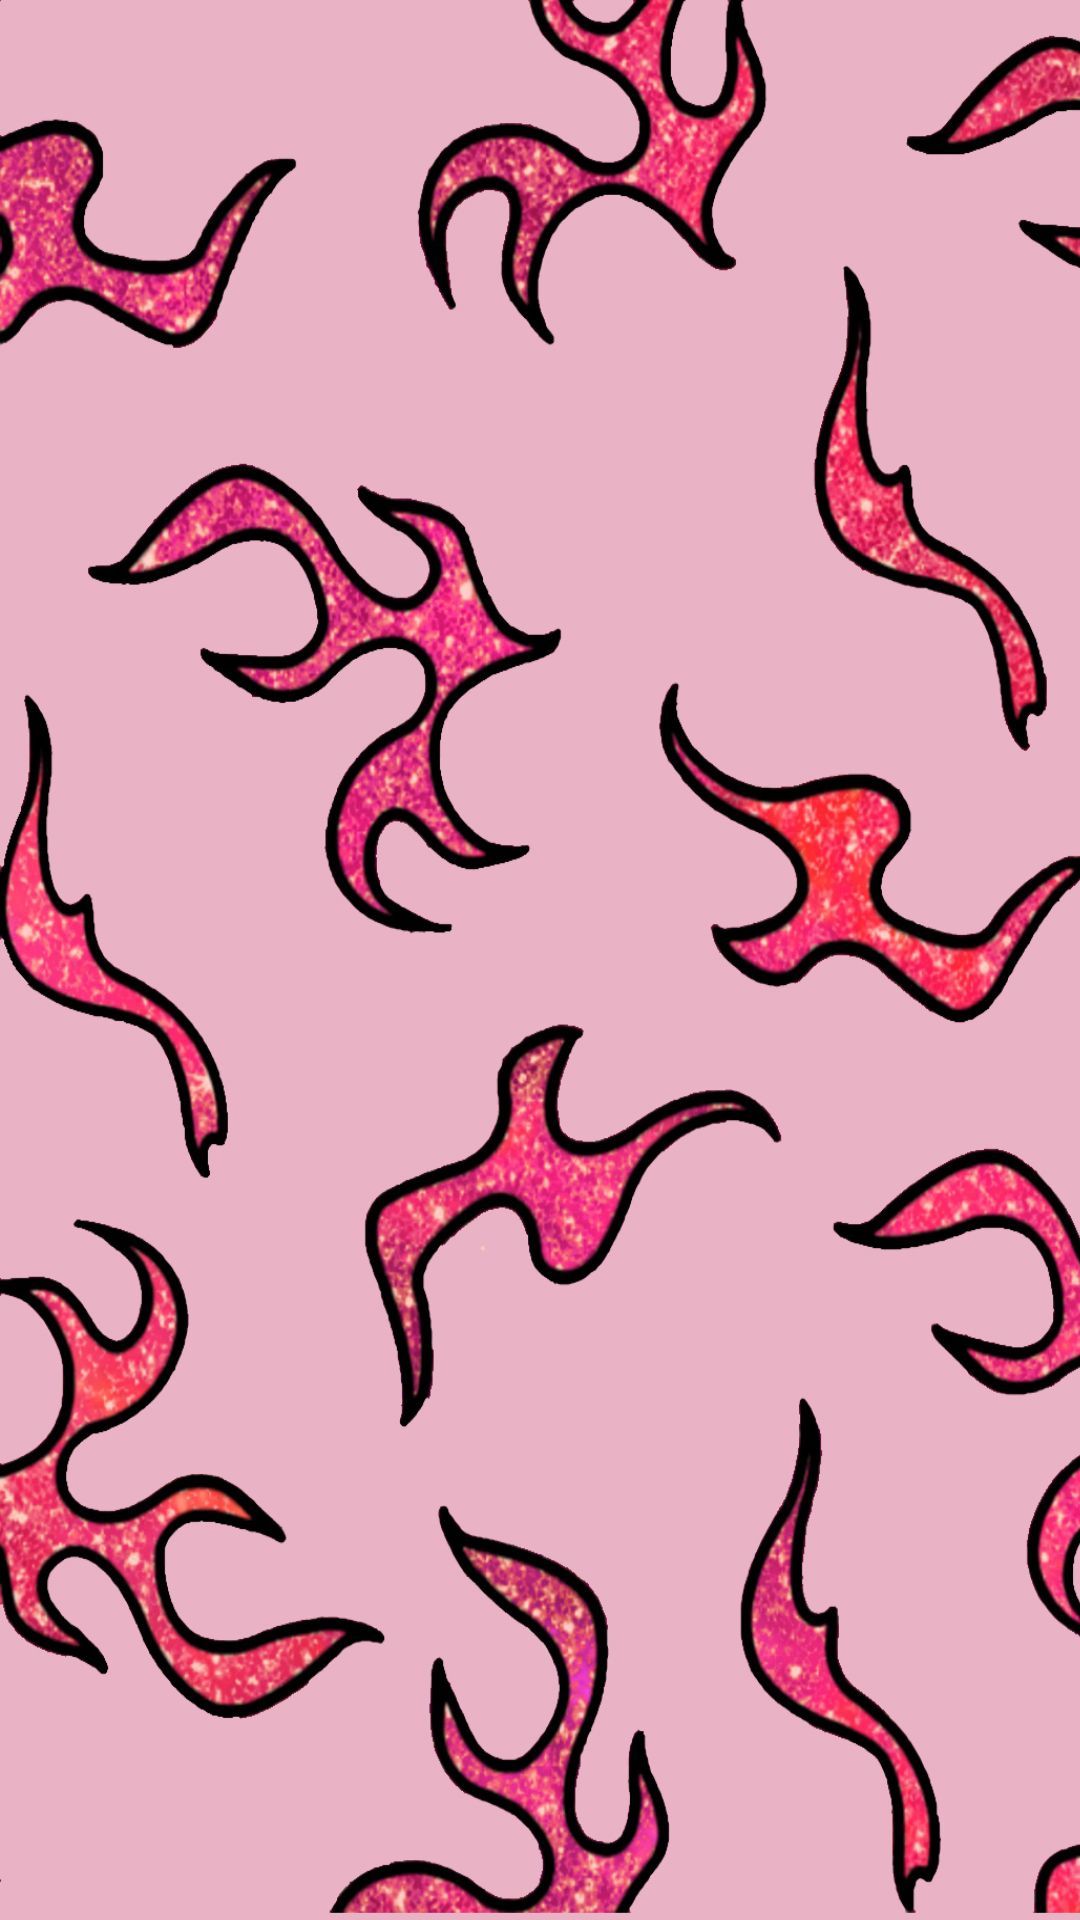 Pink Aesthetic Wallpaper. Pink wallpaper background, Preppy wallpaper, iPhone wallpaper preppy